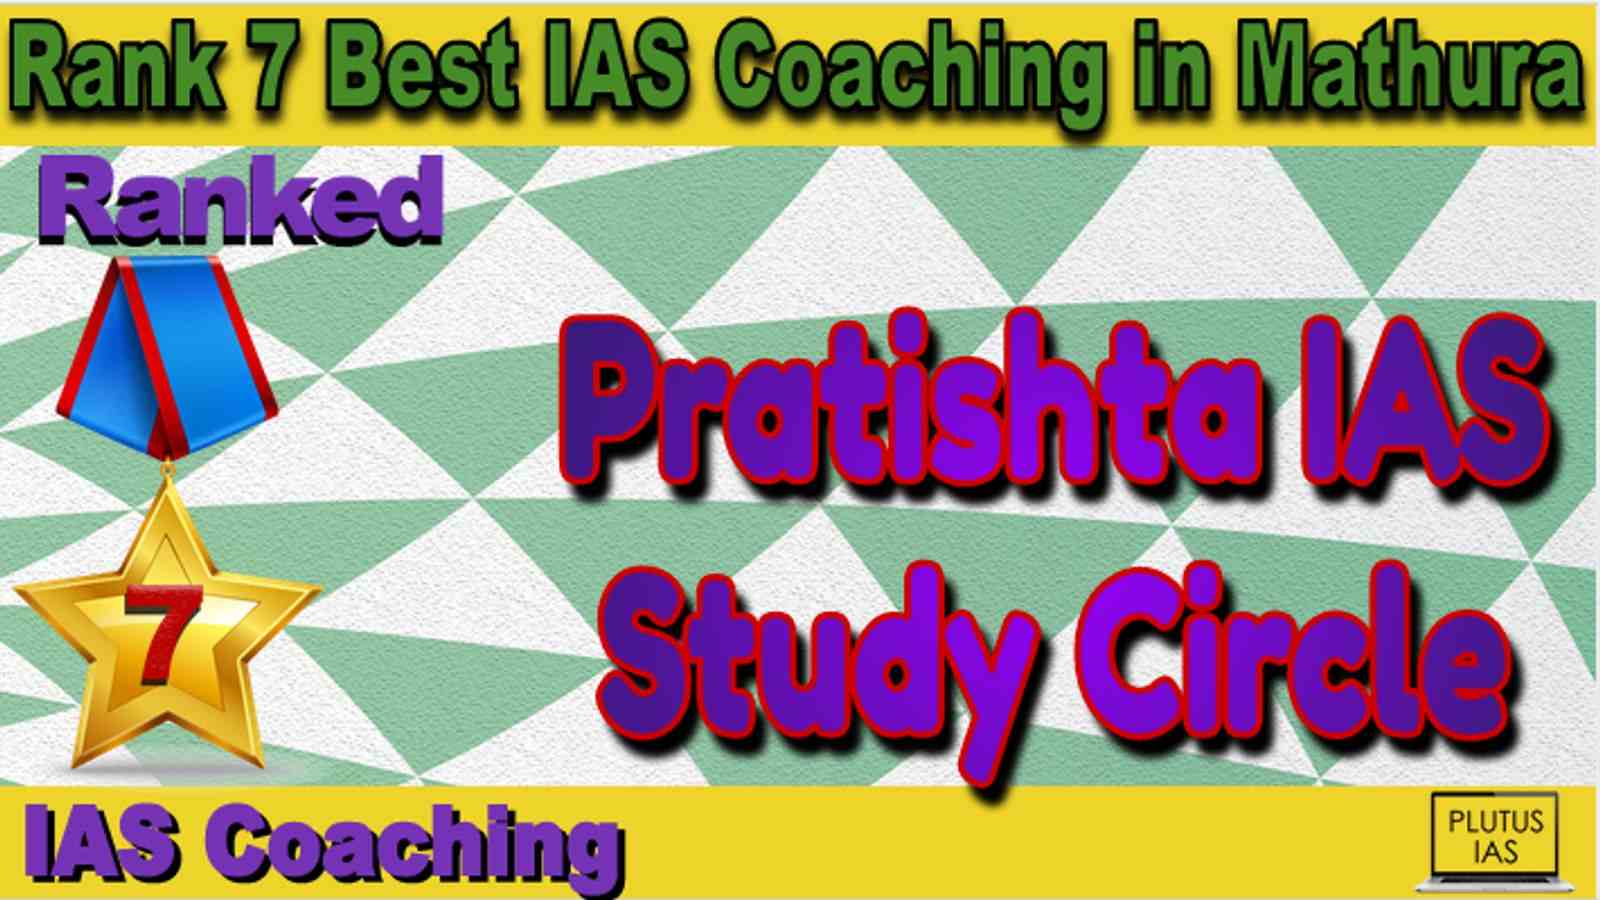 Rank 7 Best IAS Coaching in Mathura